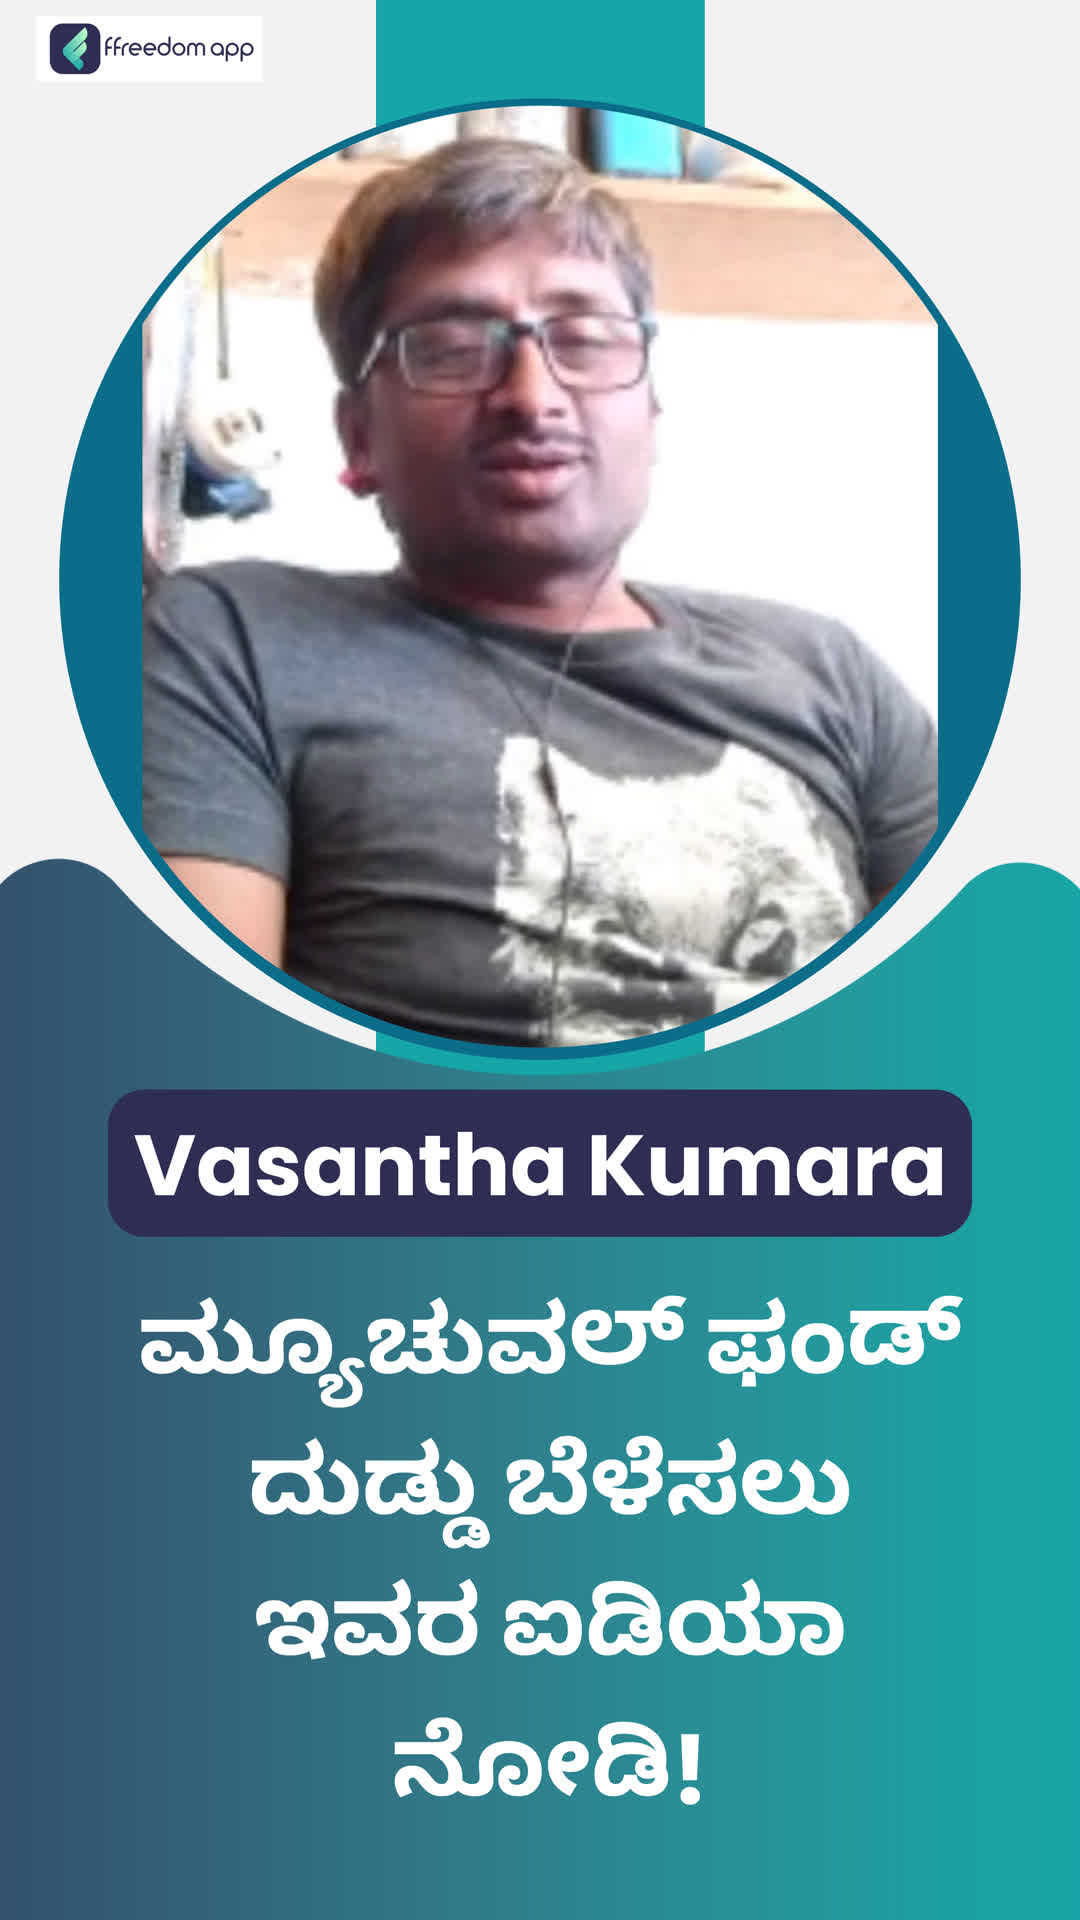 VASANTHA KUMAR K T's Honest Review of ffreedom app - Chitradurga ,Karnataka